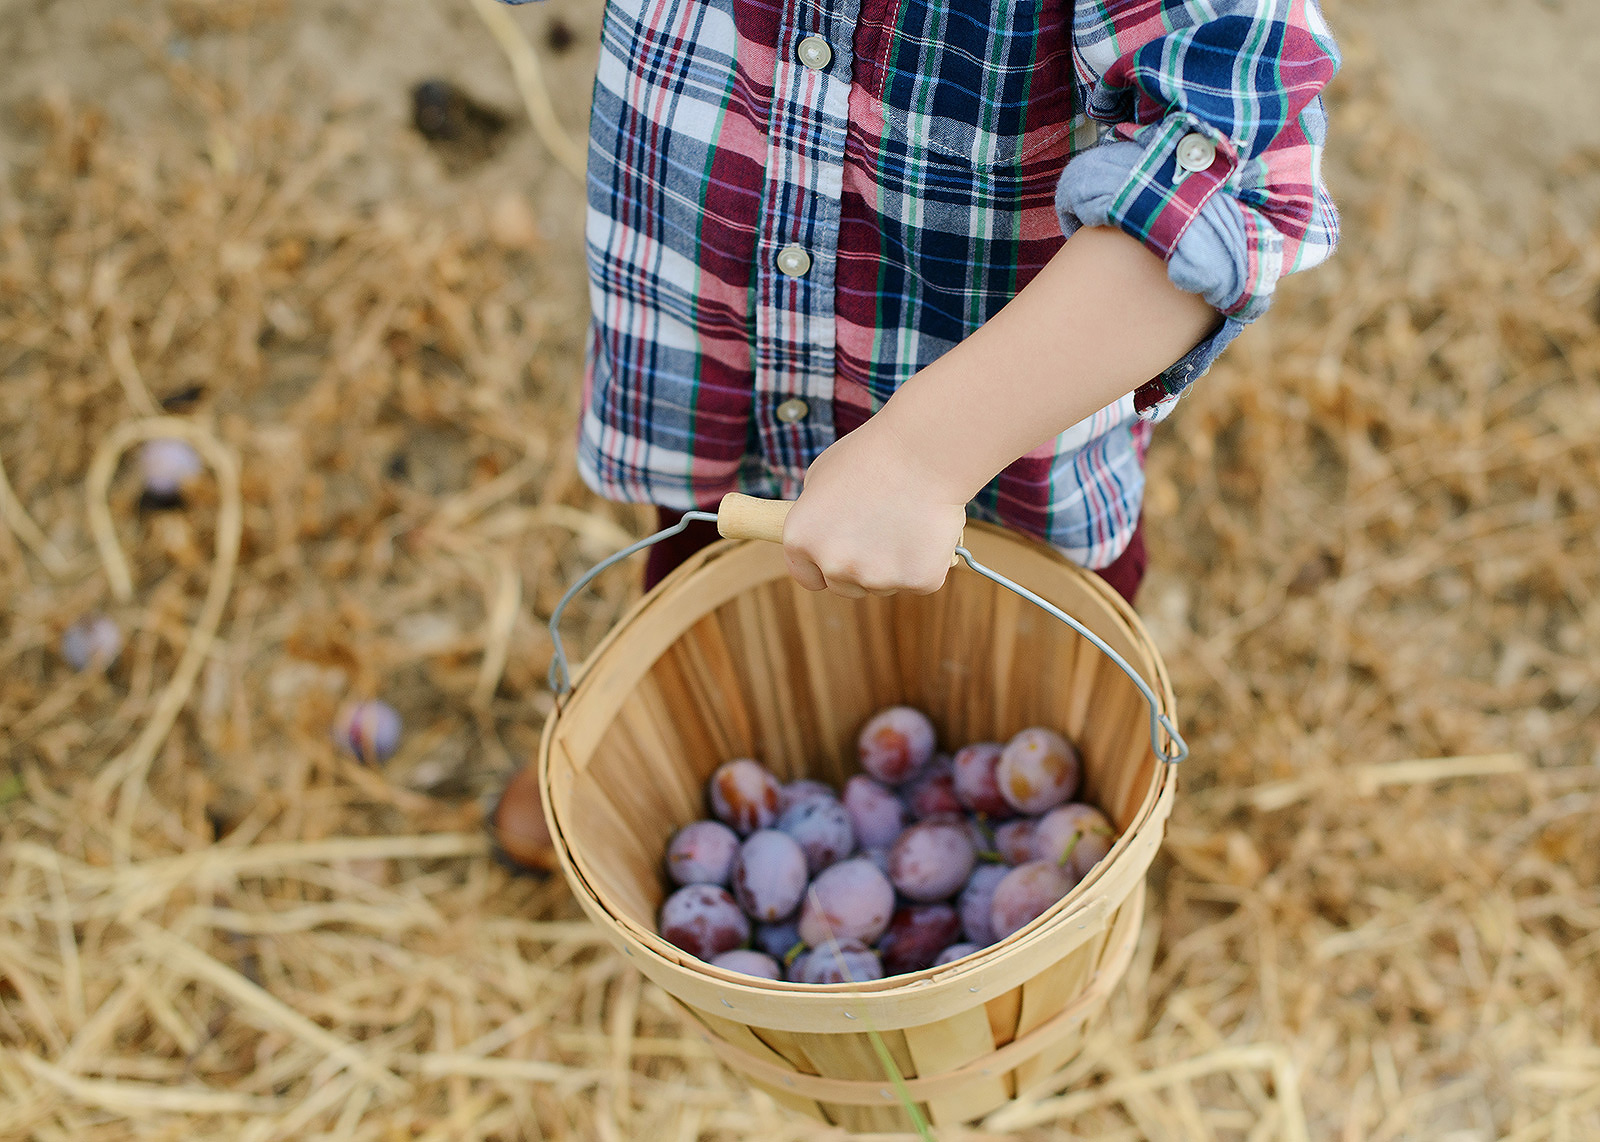 Son Holding a Bushel of Freshly Picked Prunes in a Basket 